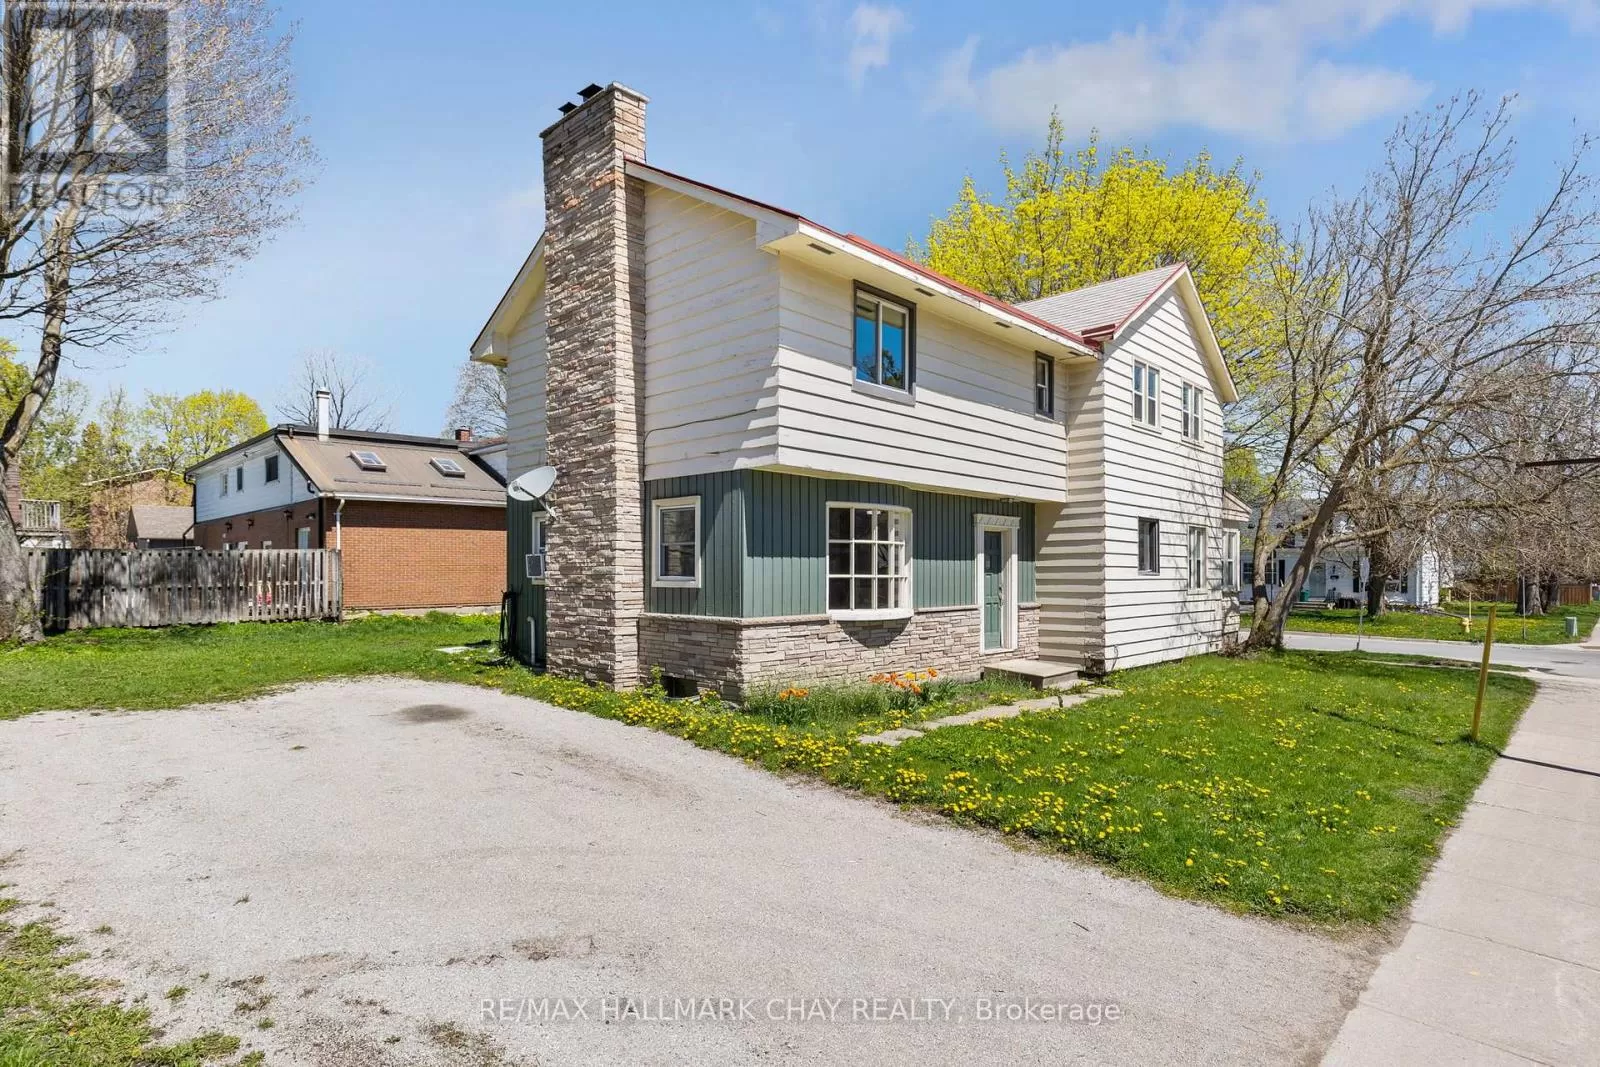 Duplex for rent: 138 Peel Street, Barrie, Ontario L4M 3L6